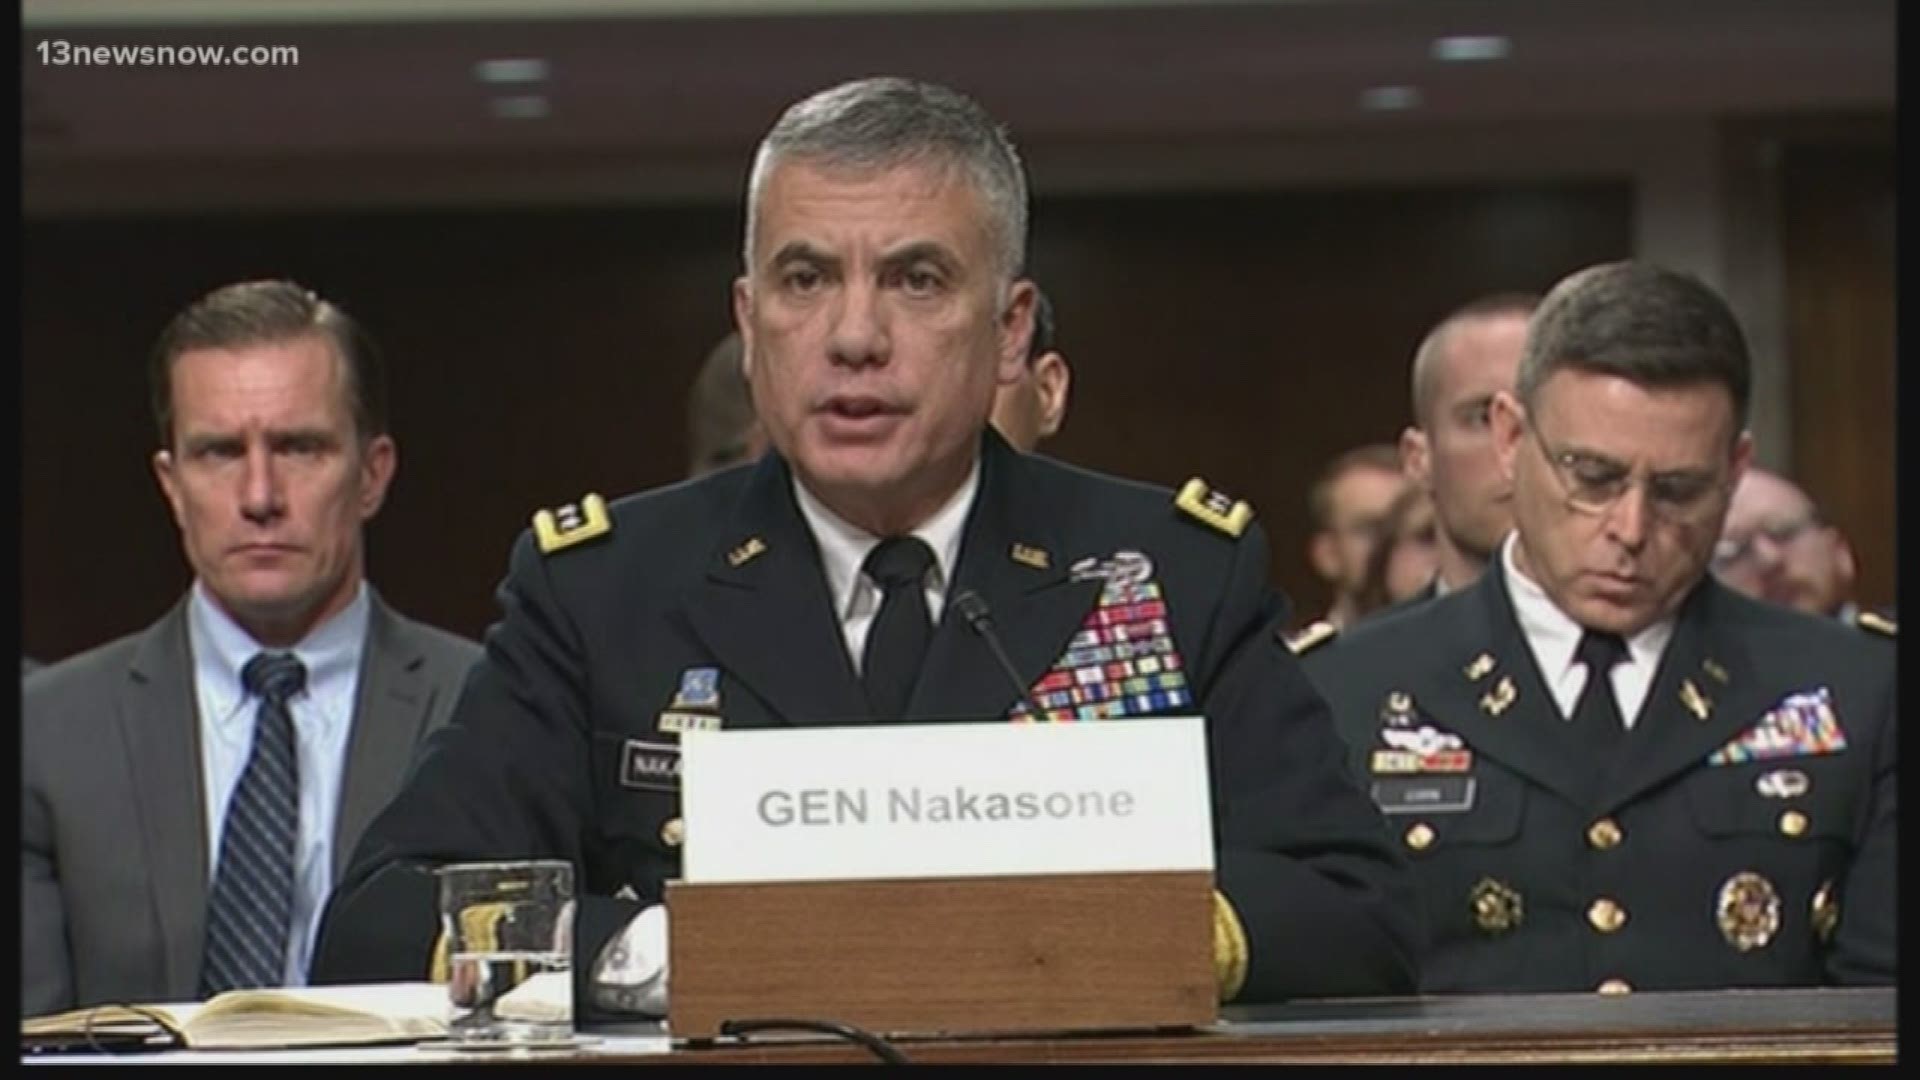 General Nakisone acknowledges that American people should be concerned.